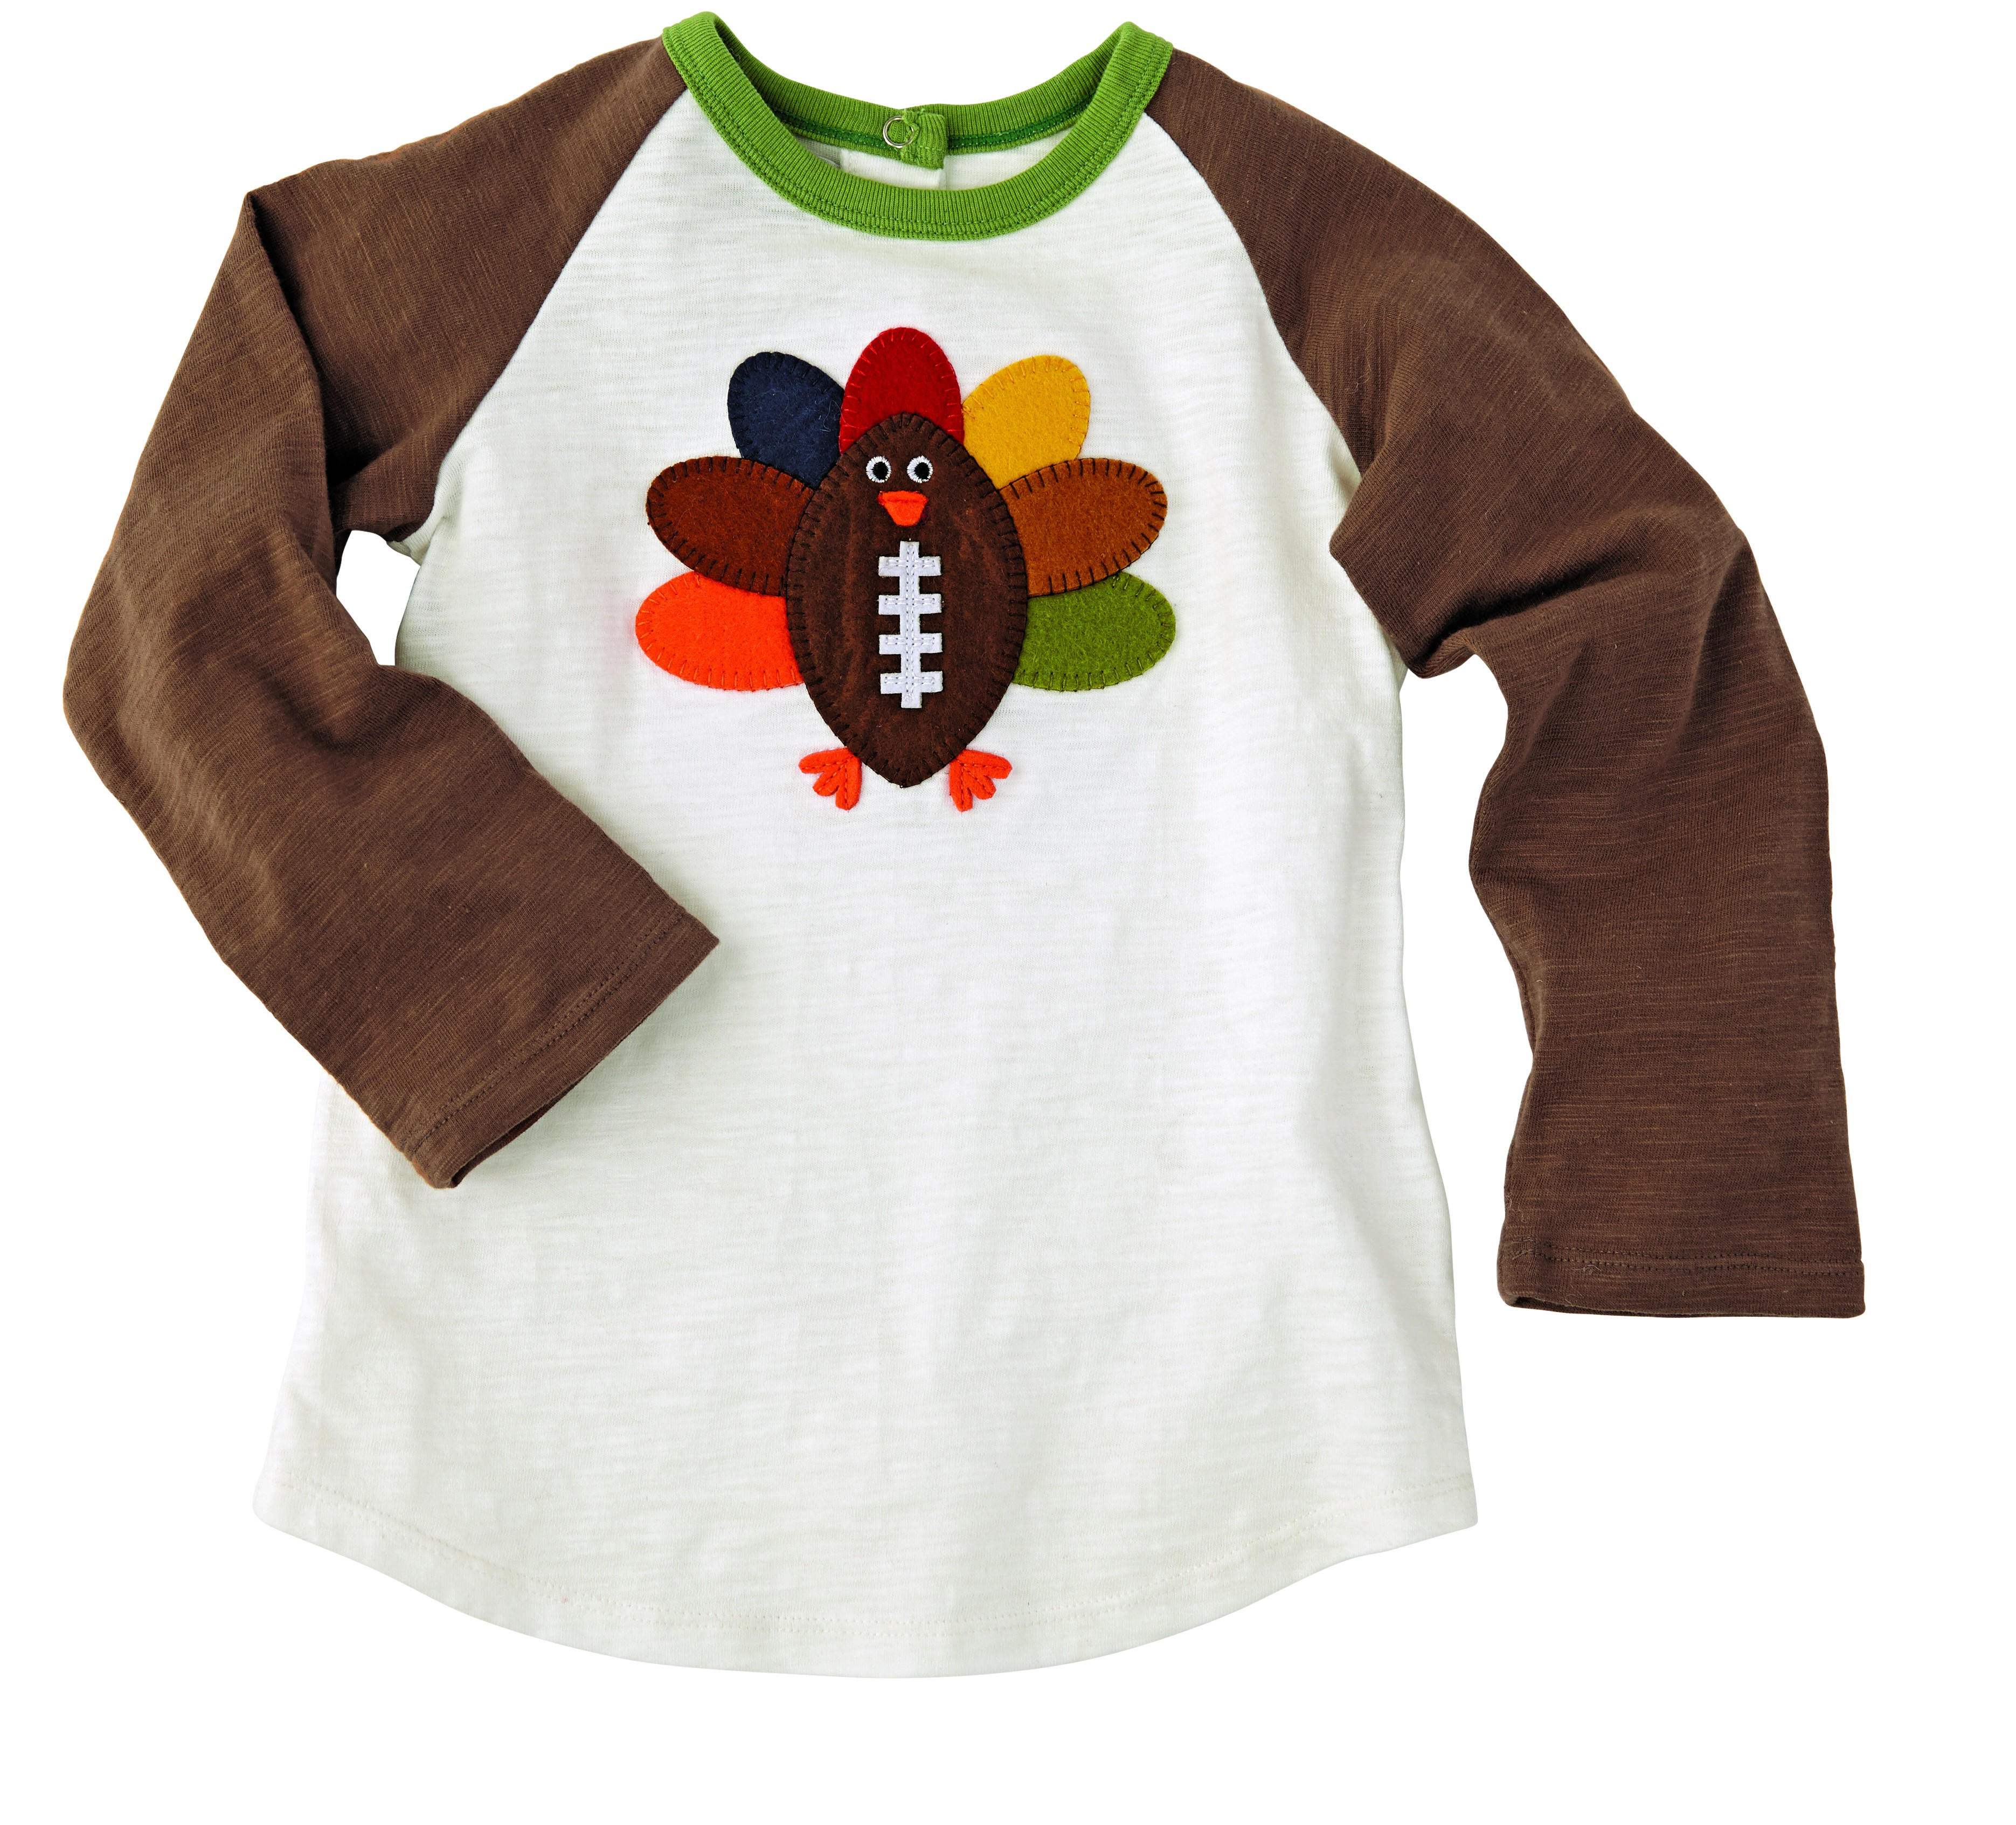 Turkey Shirts For Thanksgiving
 Football Turkey T Shirt by Mud Pie